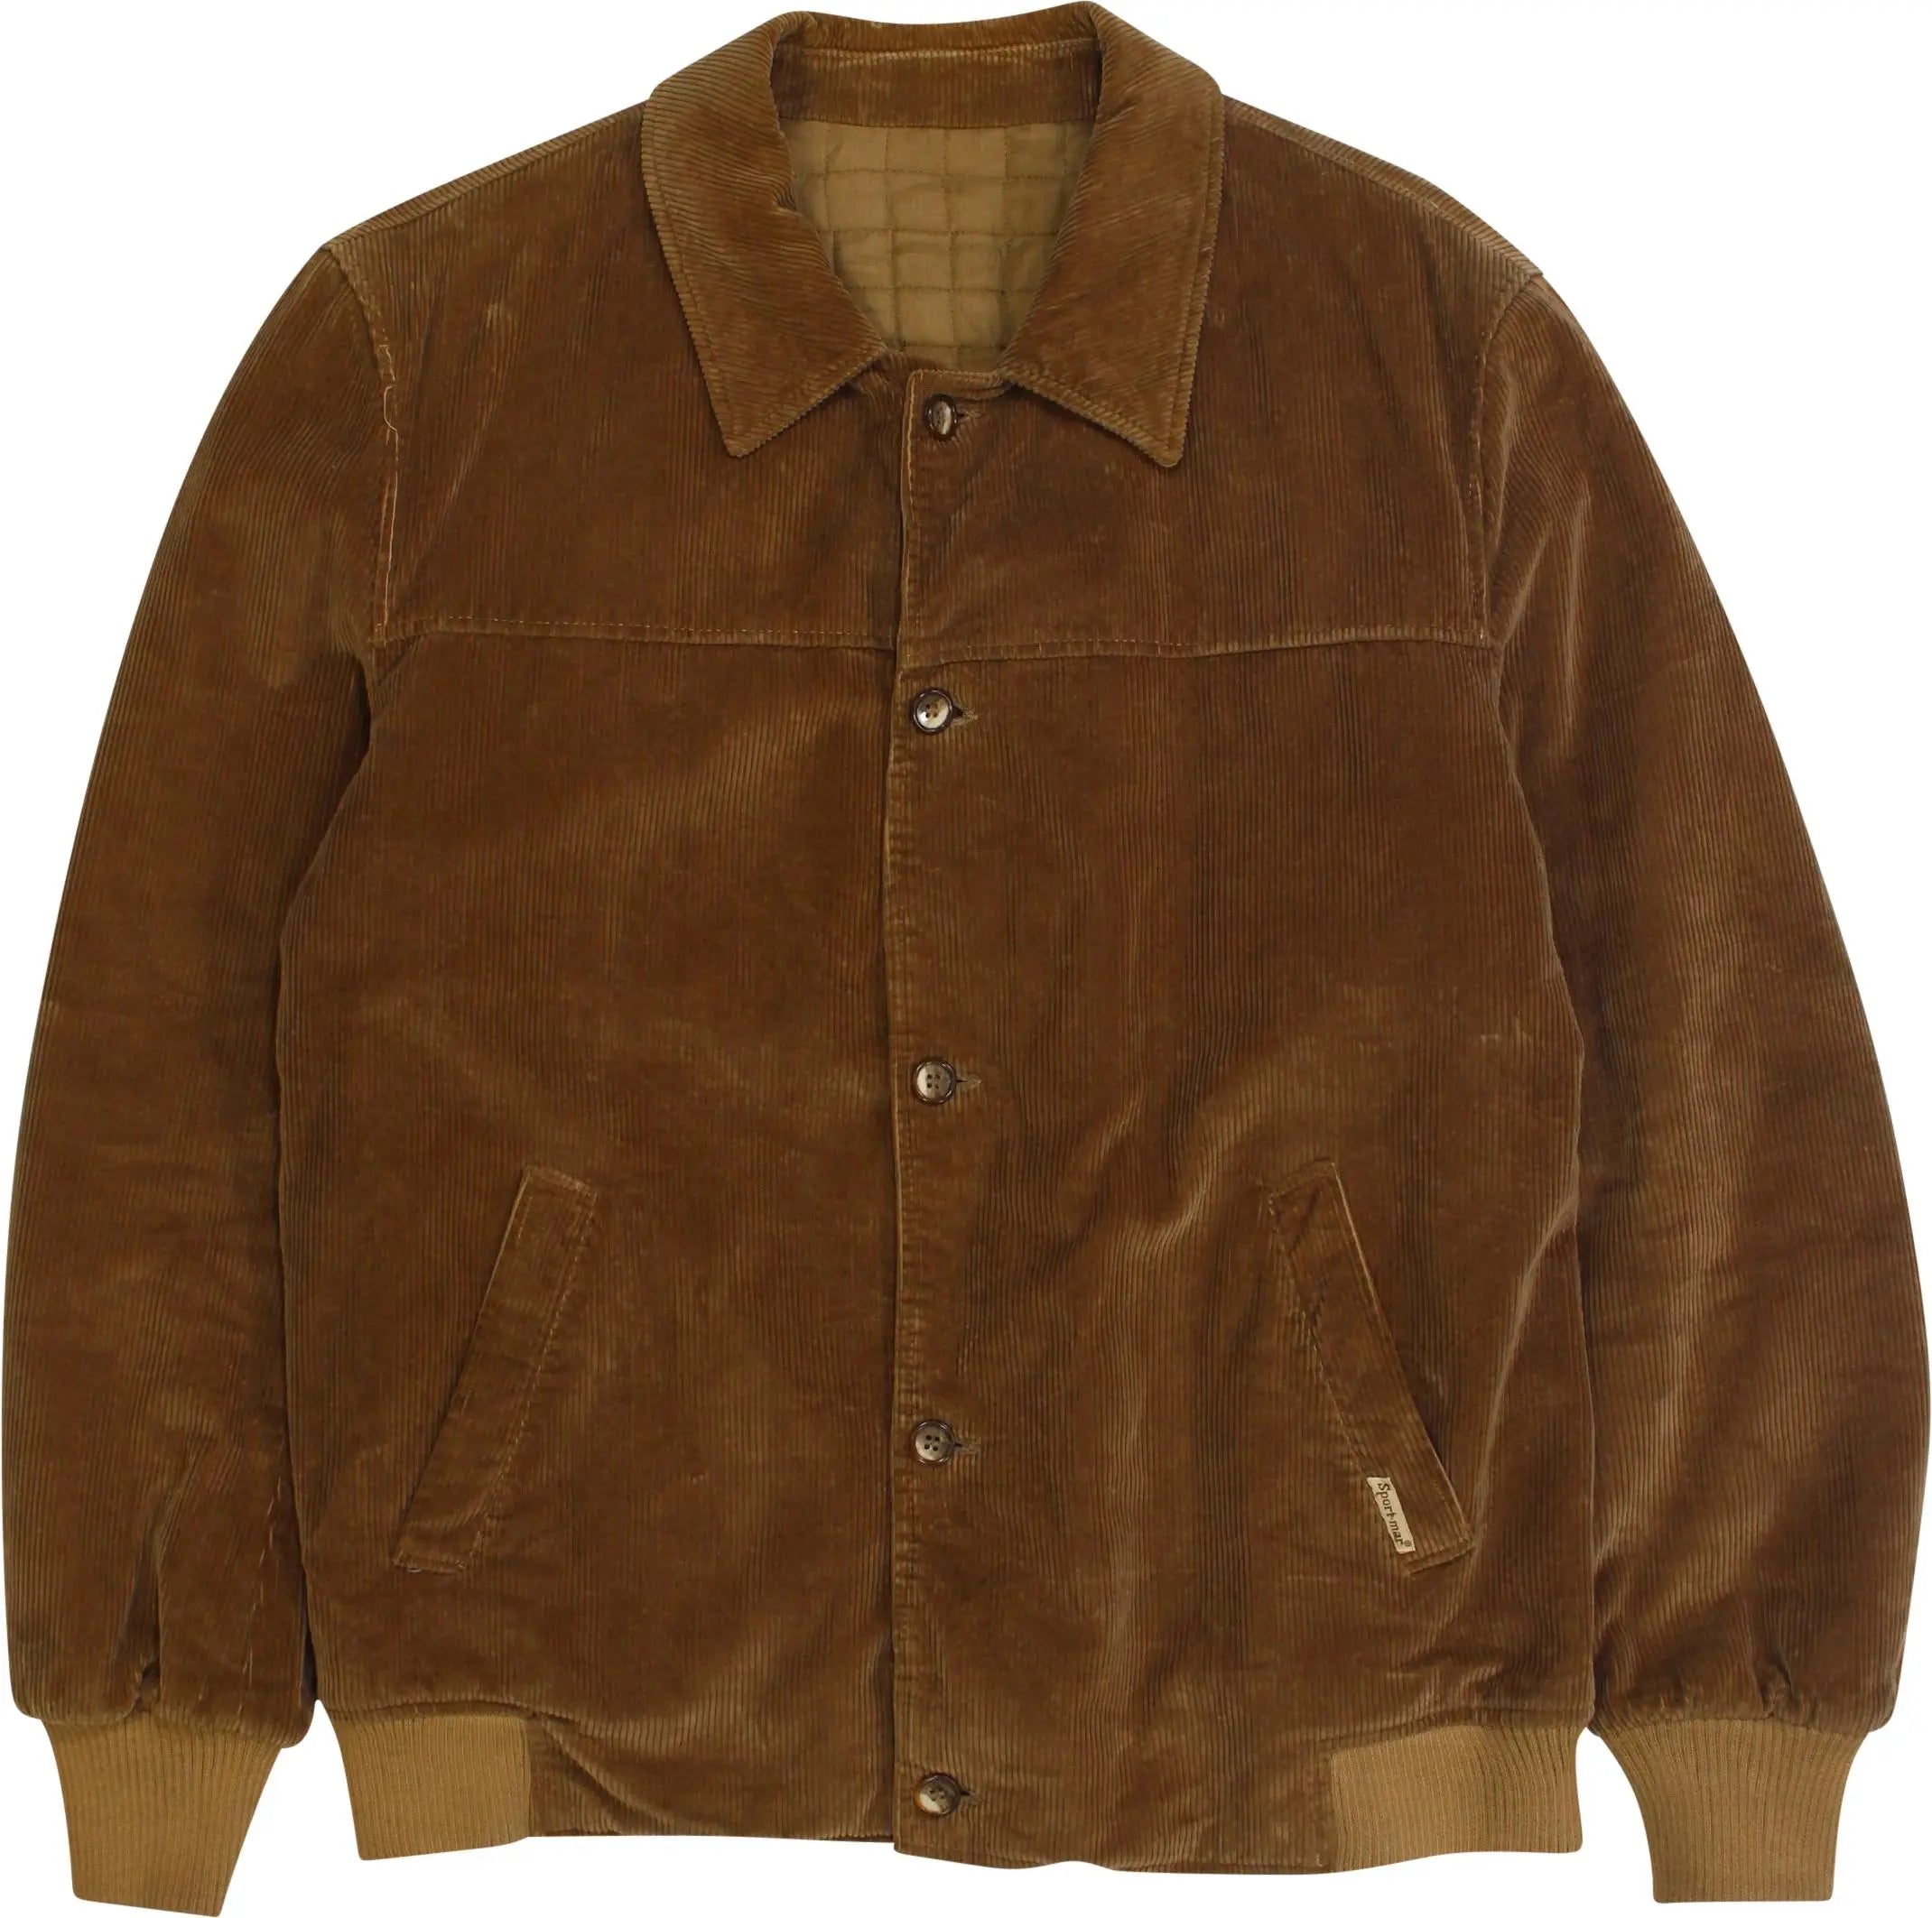 Sportmar - Corduroy Jacket- ThriftTale.com - Vintage and second handclothing